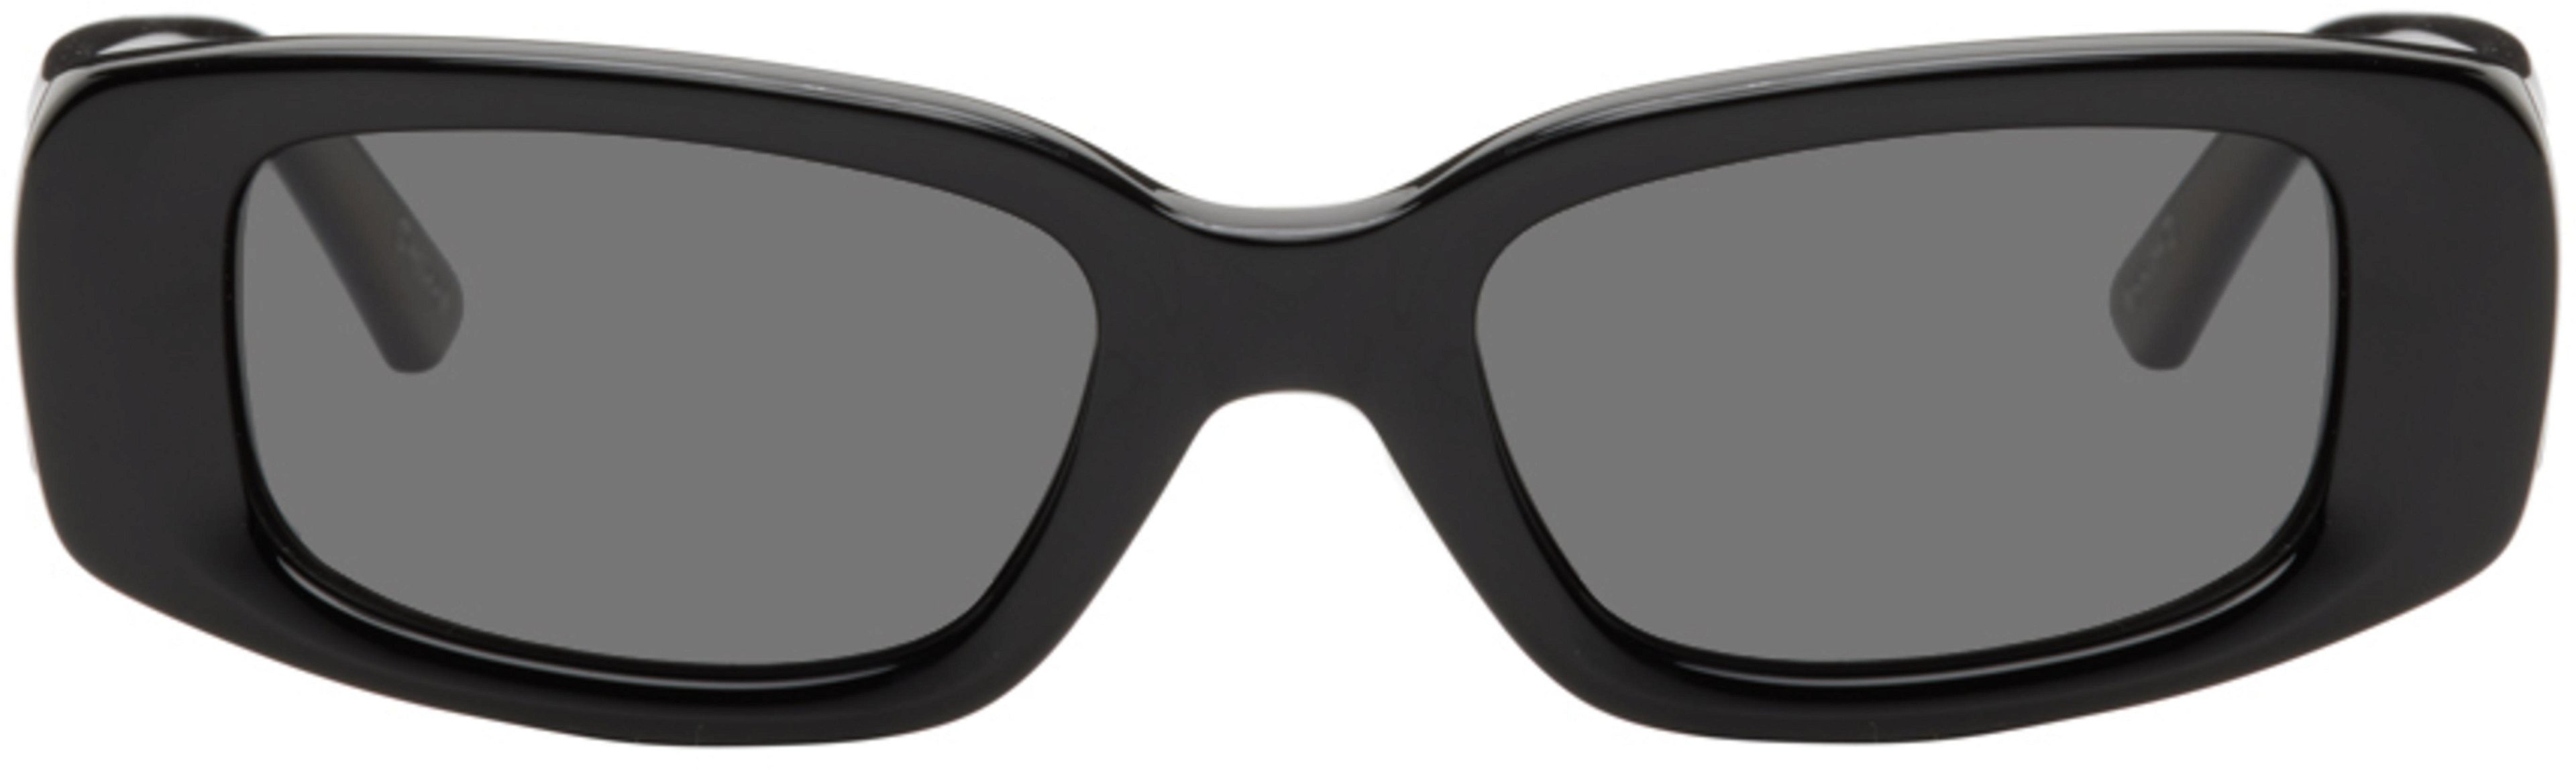 Black 10 Acetate Sunglasses by CHIMI